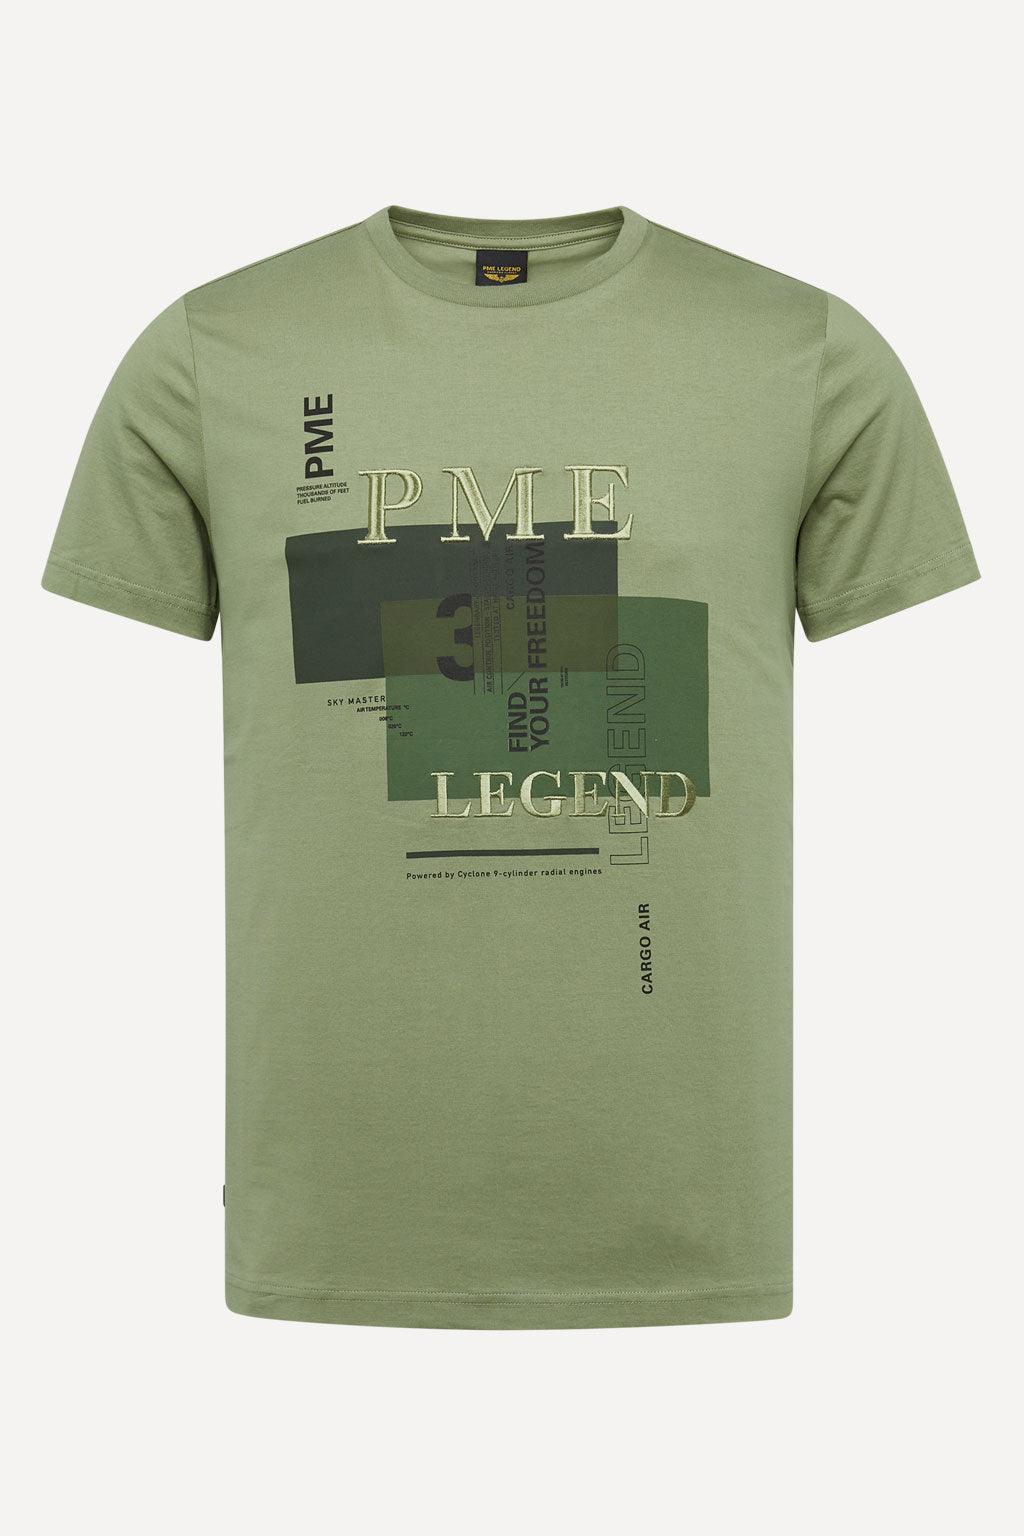 PME Legend t-shirt | Big Boss | the menswear concept